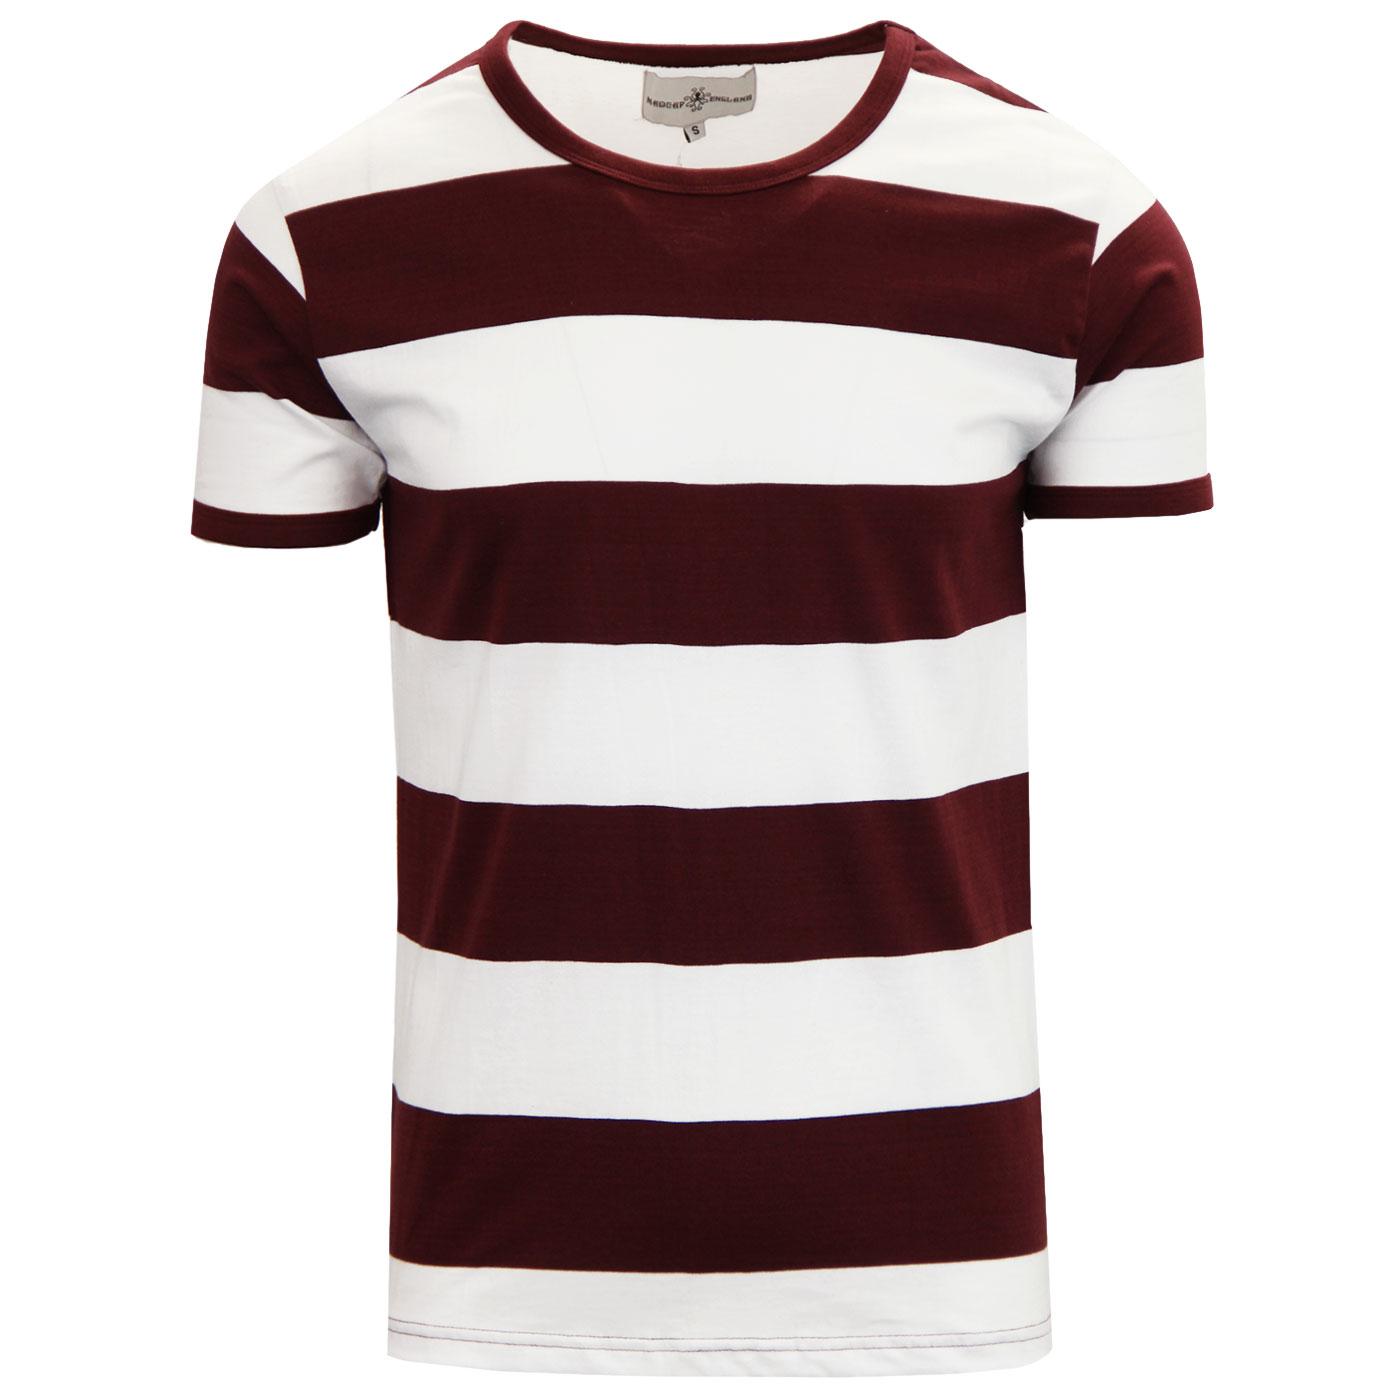 Madcap England Milne Retro 1960s Mod Block Stripe T-shirt in Zinfandel